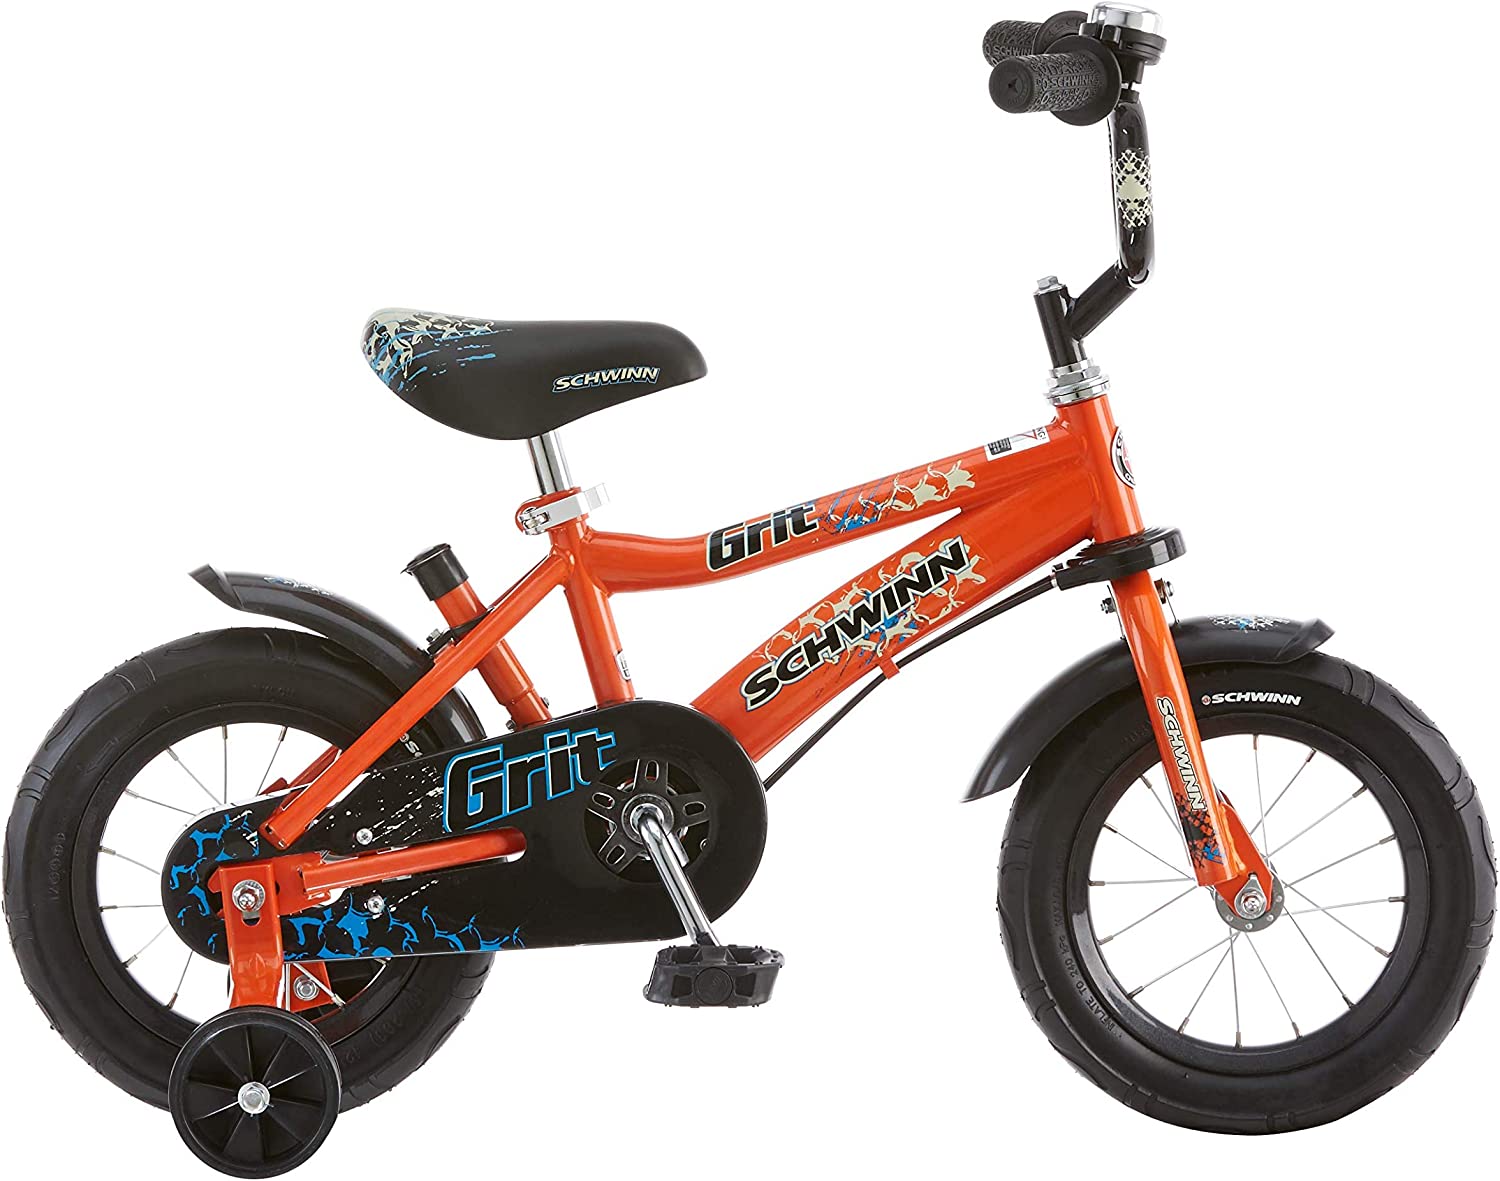 Bicicleta para niños principiantes con mango de dirección